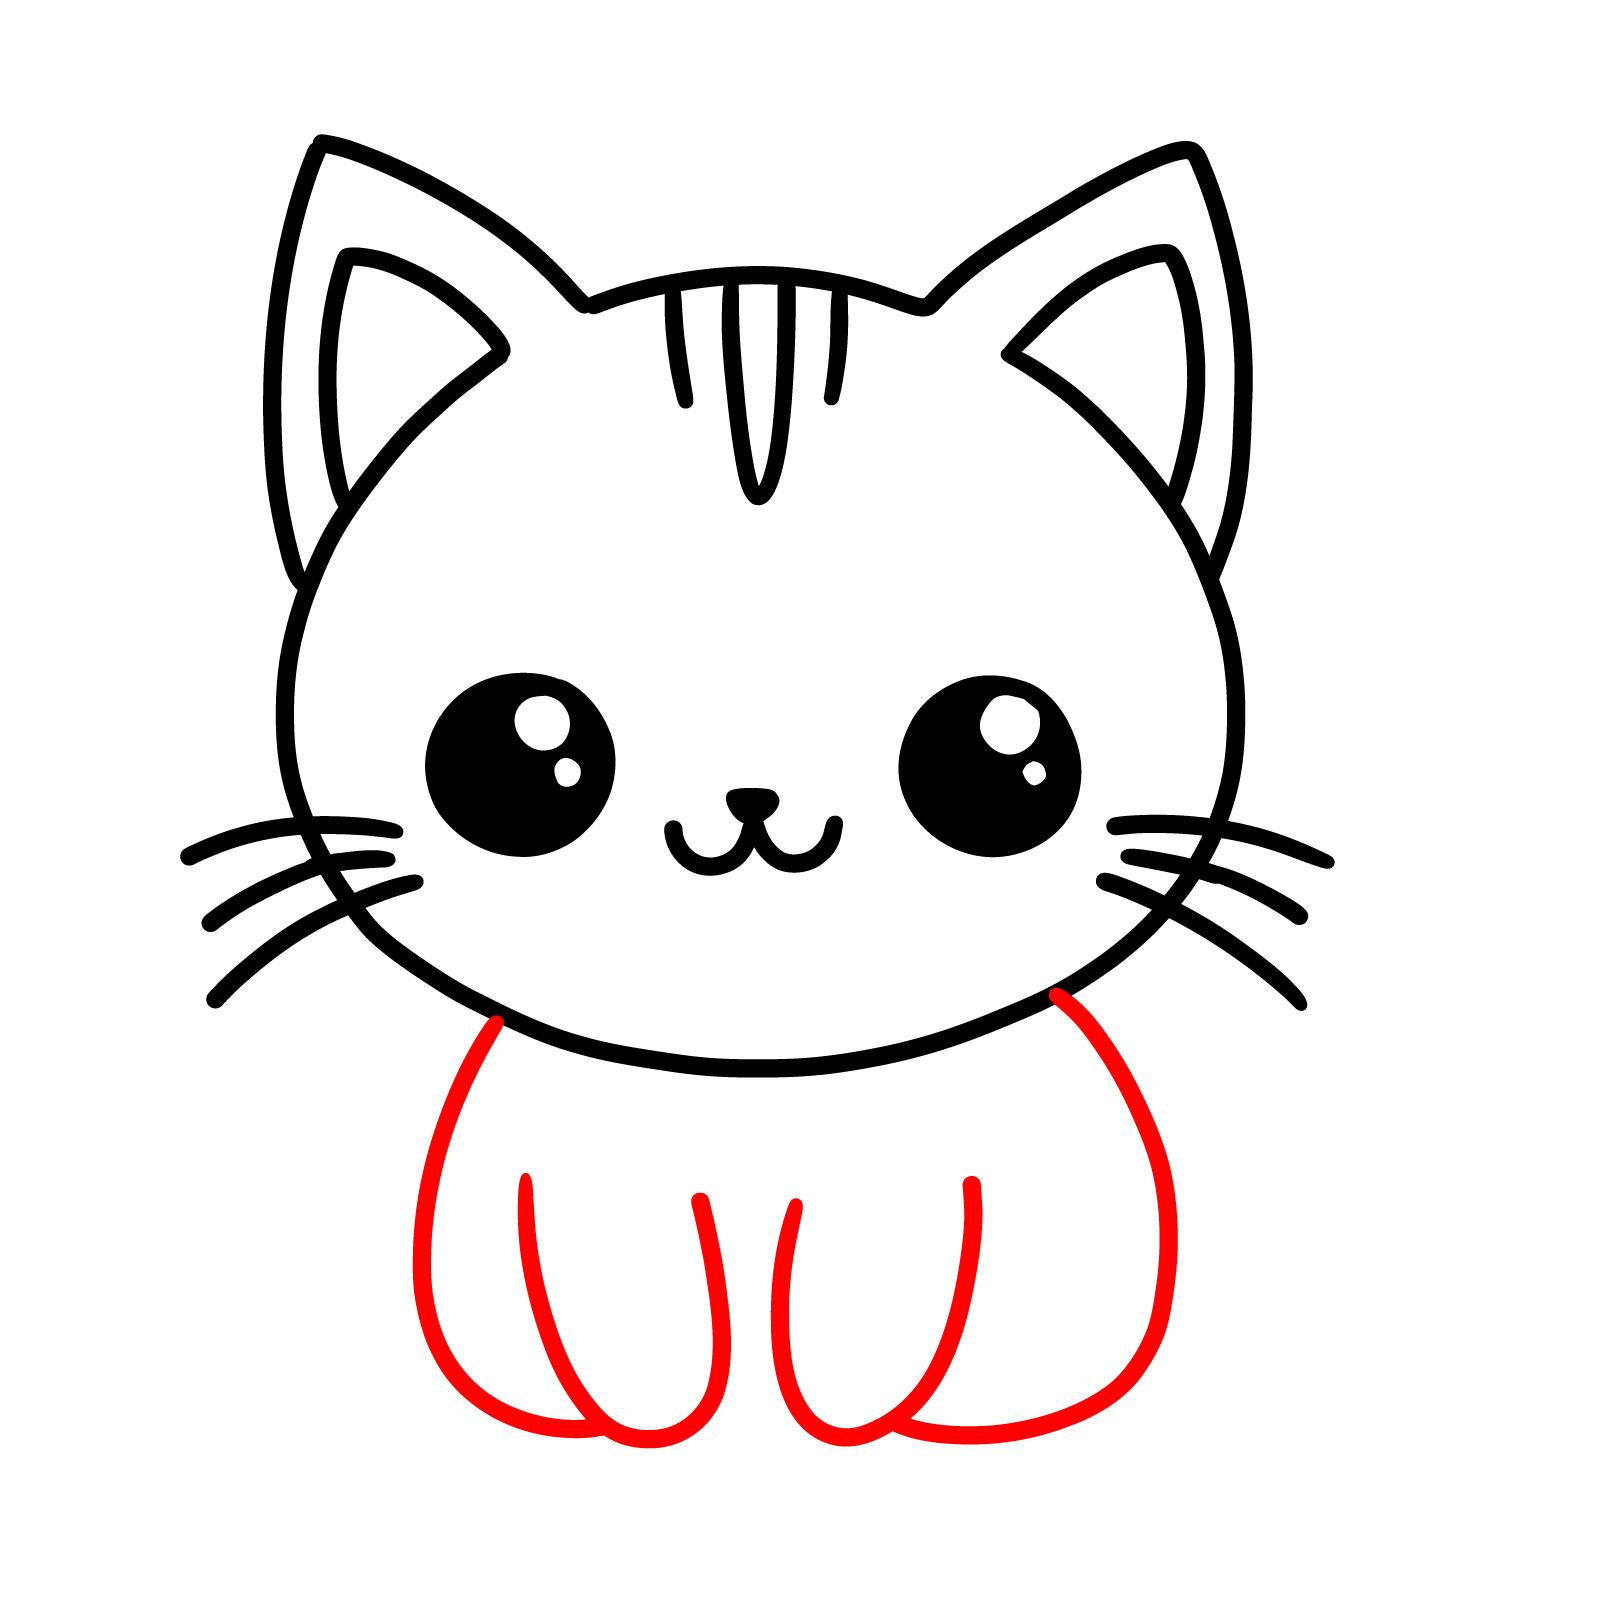 How to draw a Kawaii Cat - step 05